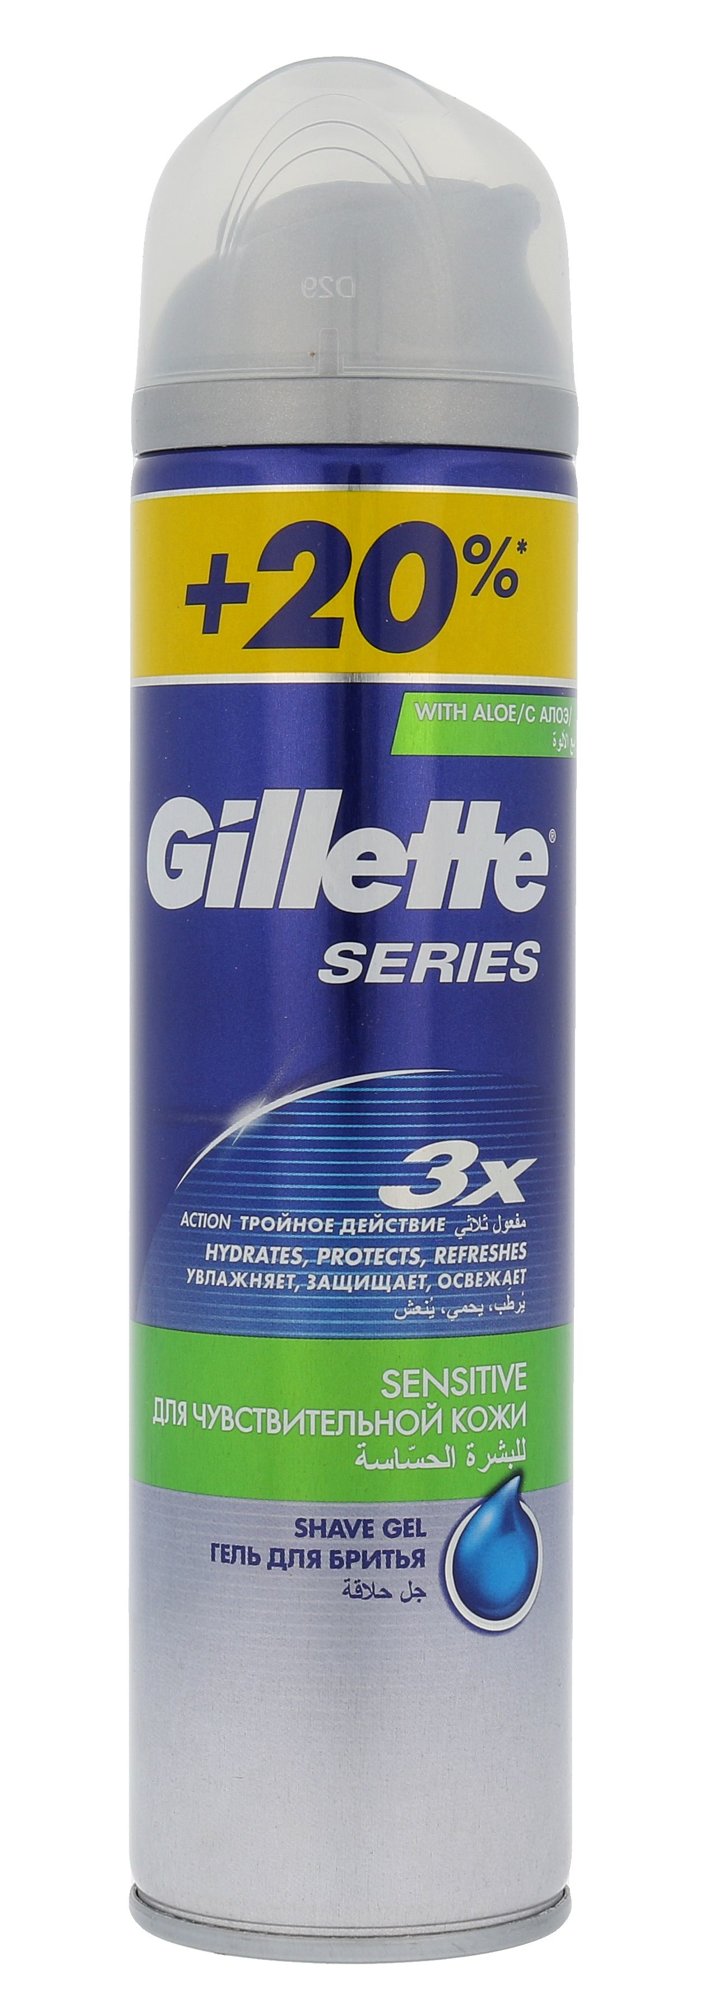 Gillette Series Sensitive 240ml skutimosi gelis